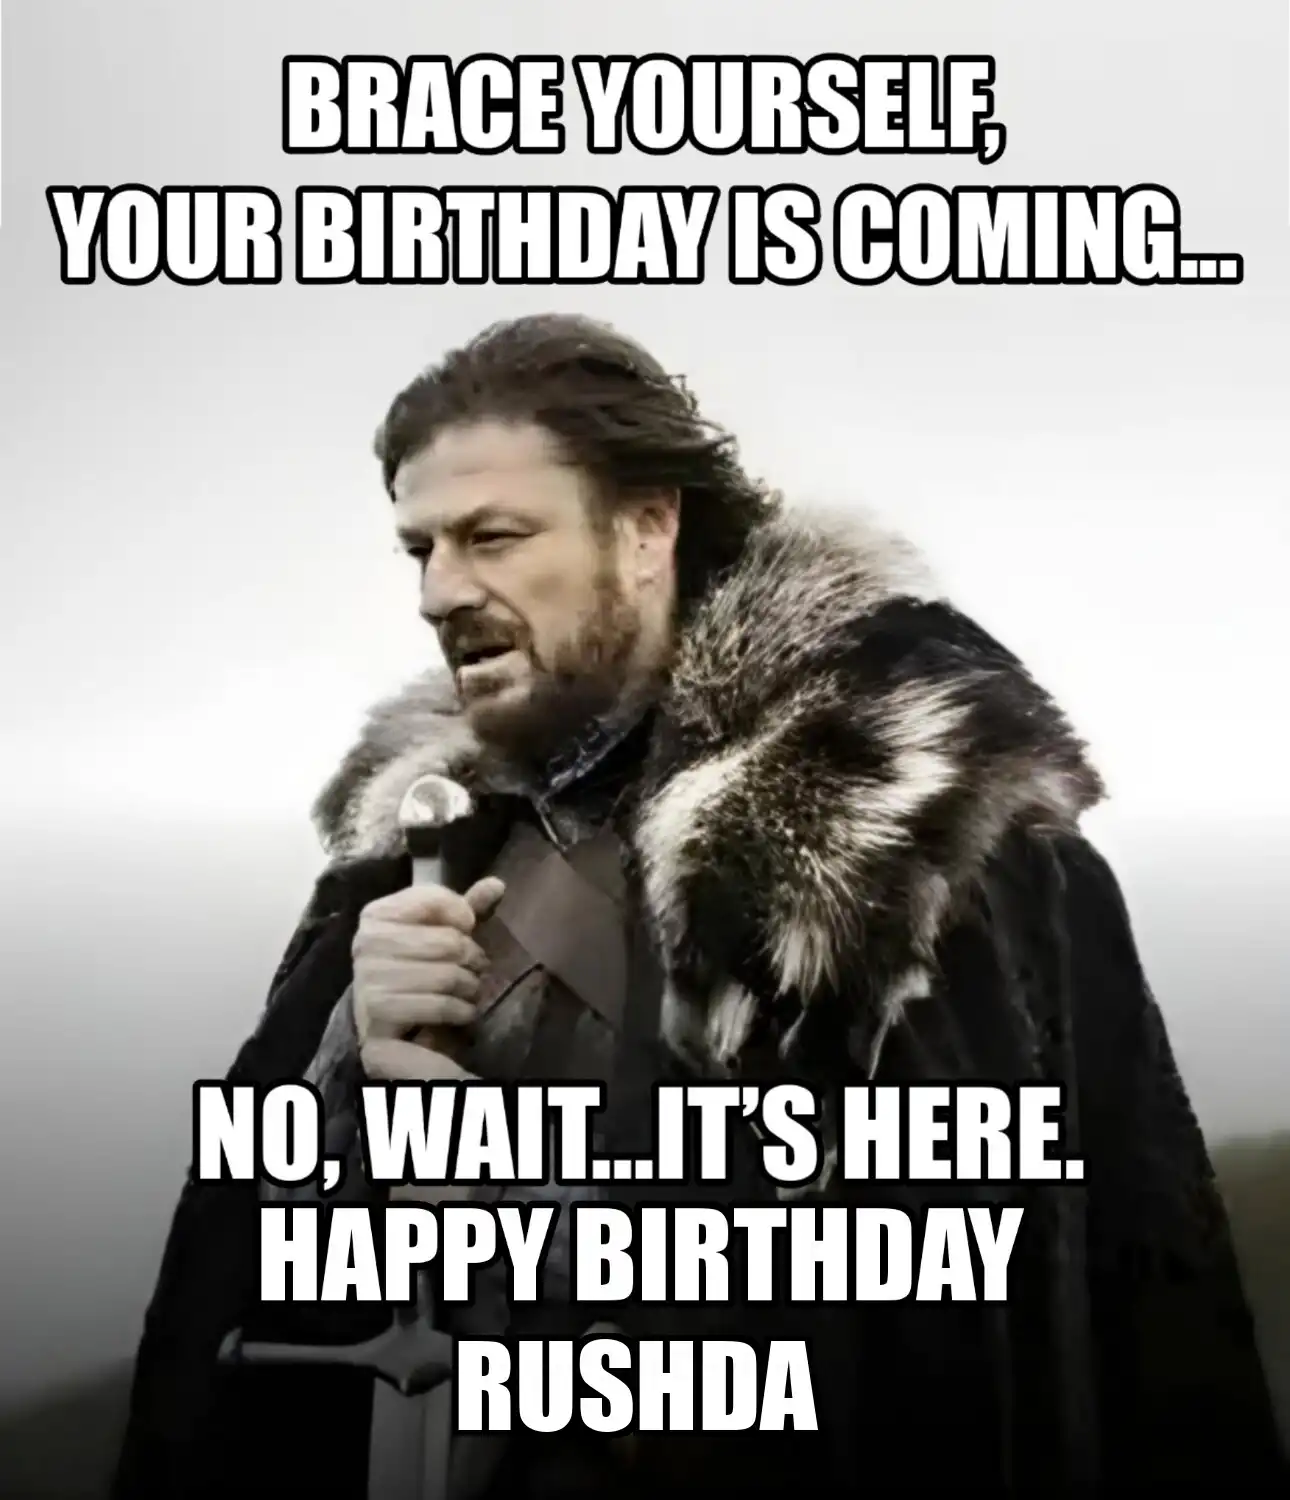 Happy Birthday Rushda Brace Yourself Your Birthday Is Coming Meme